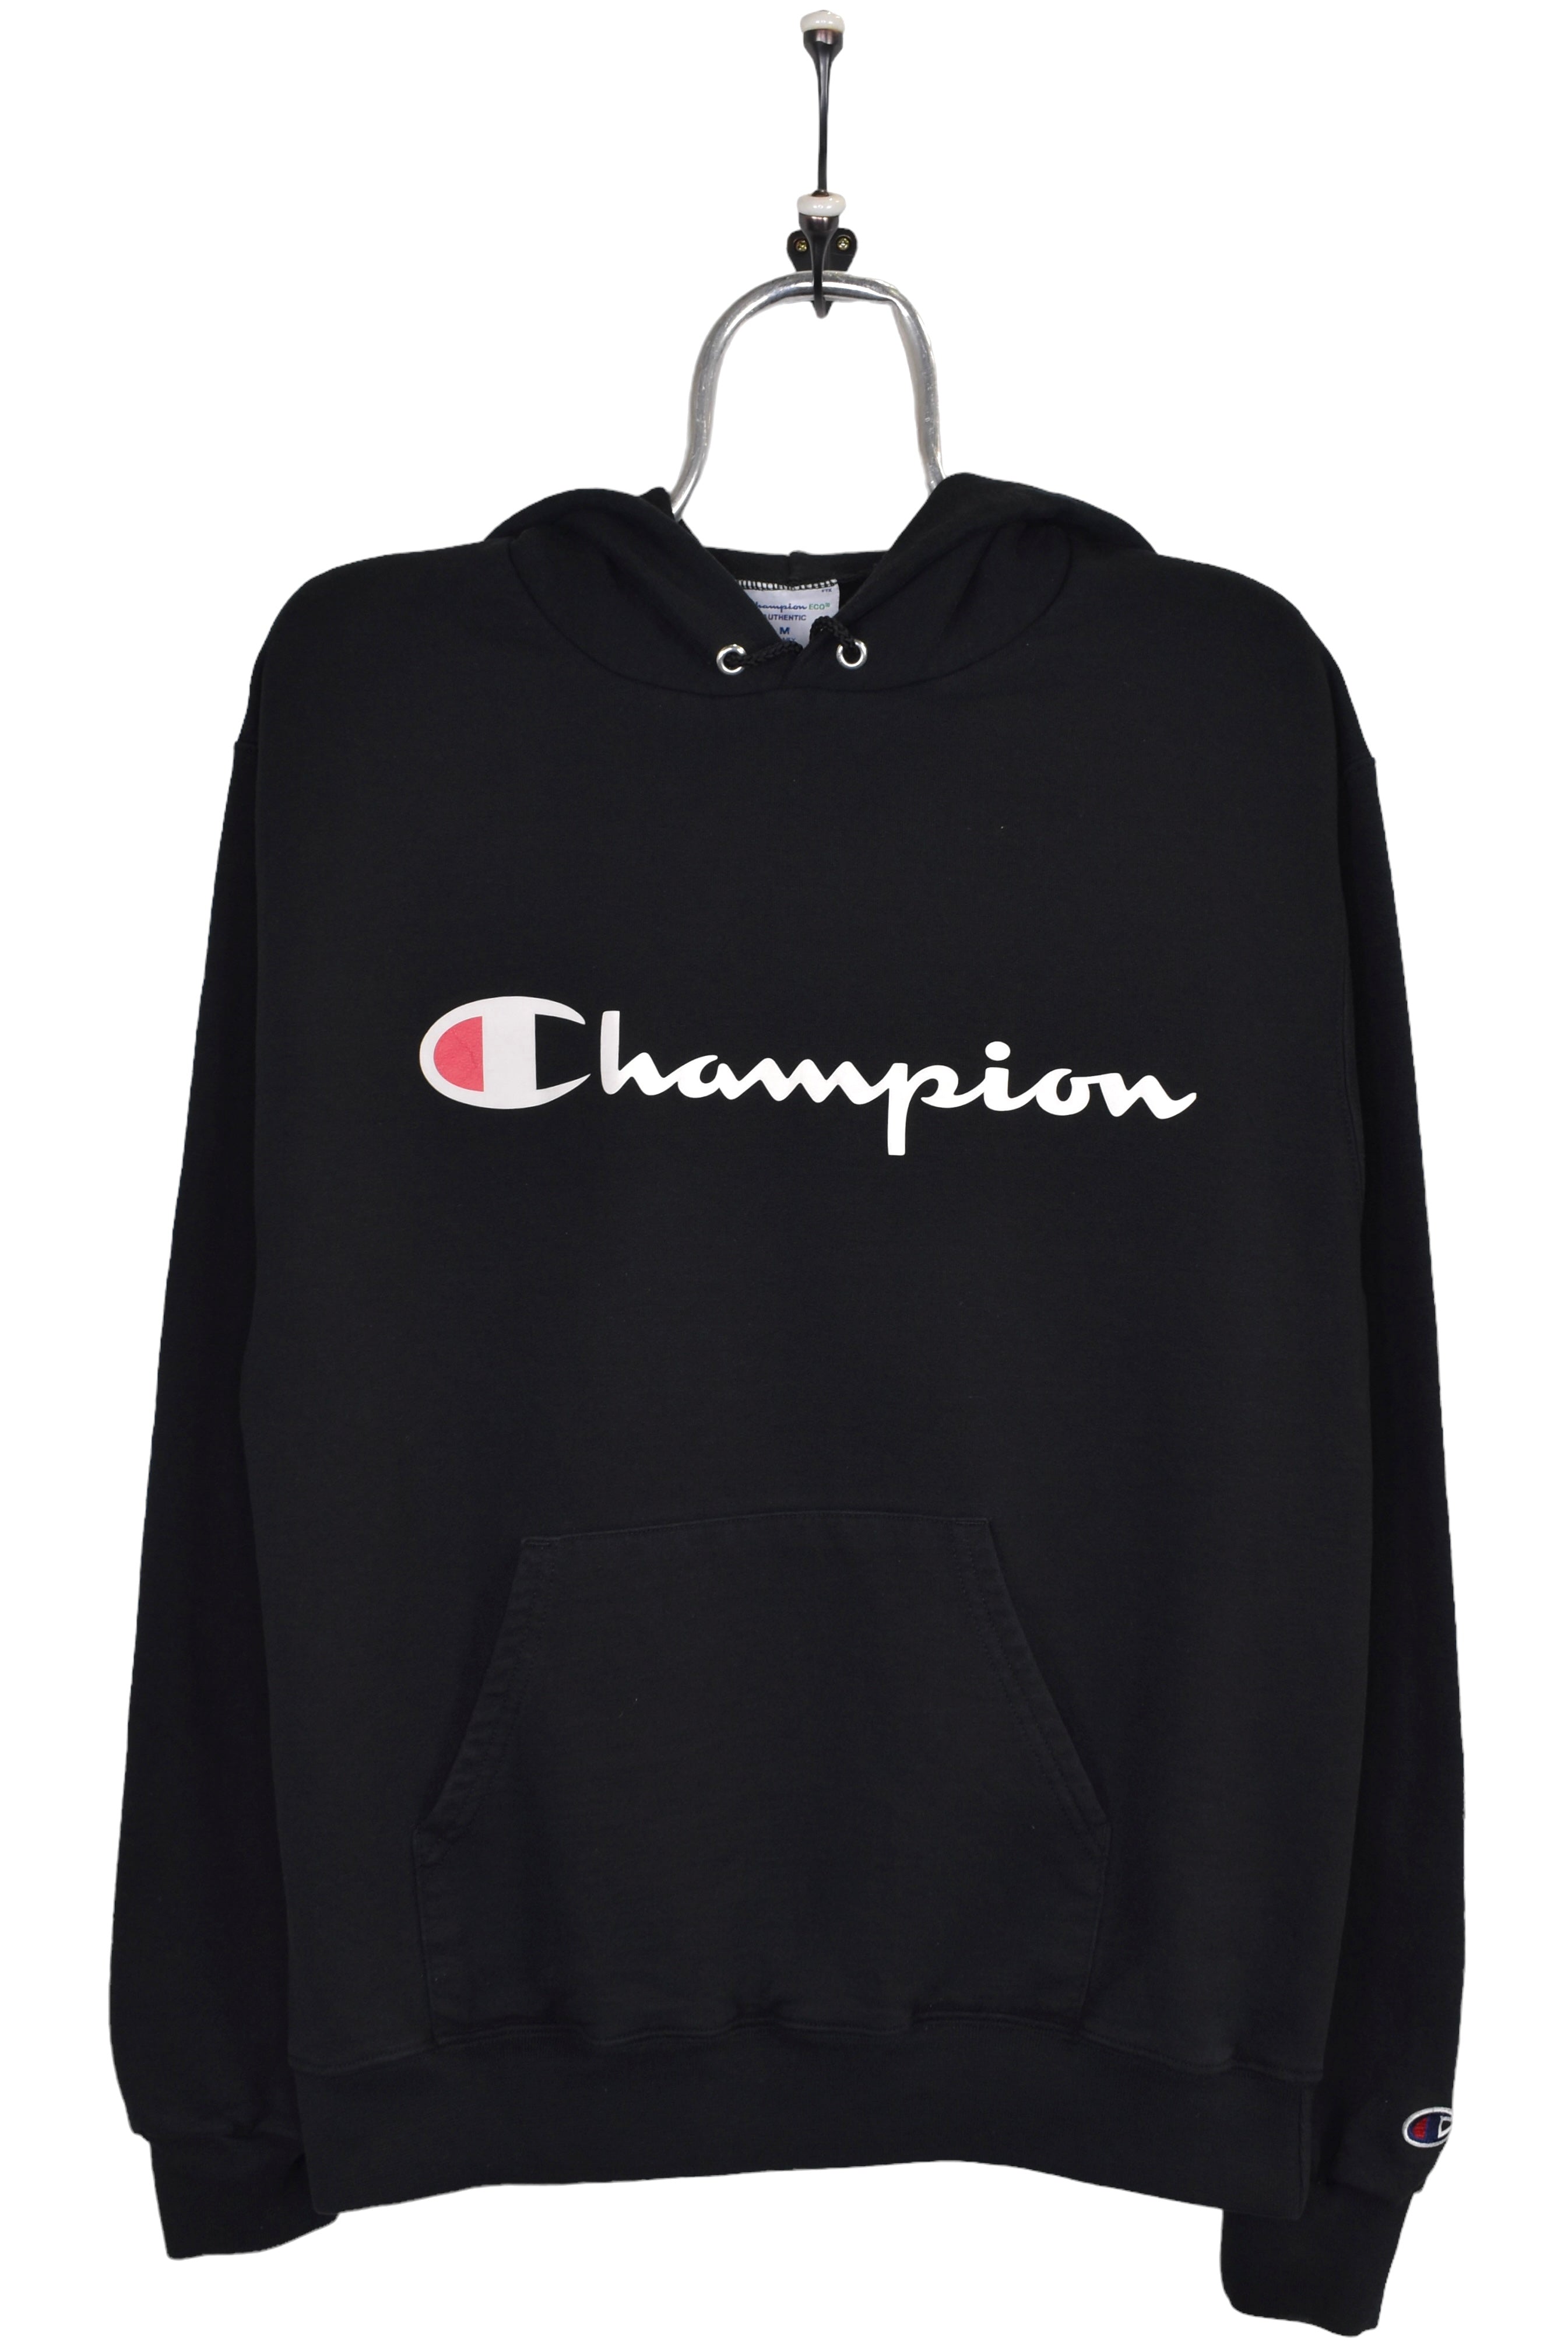 Modern Champion hoodie, black graphic sweatshirt - Medium